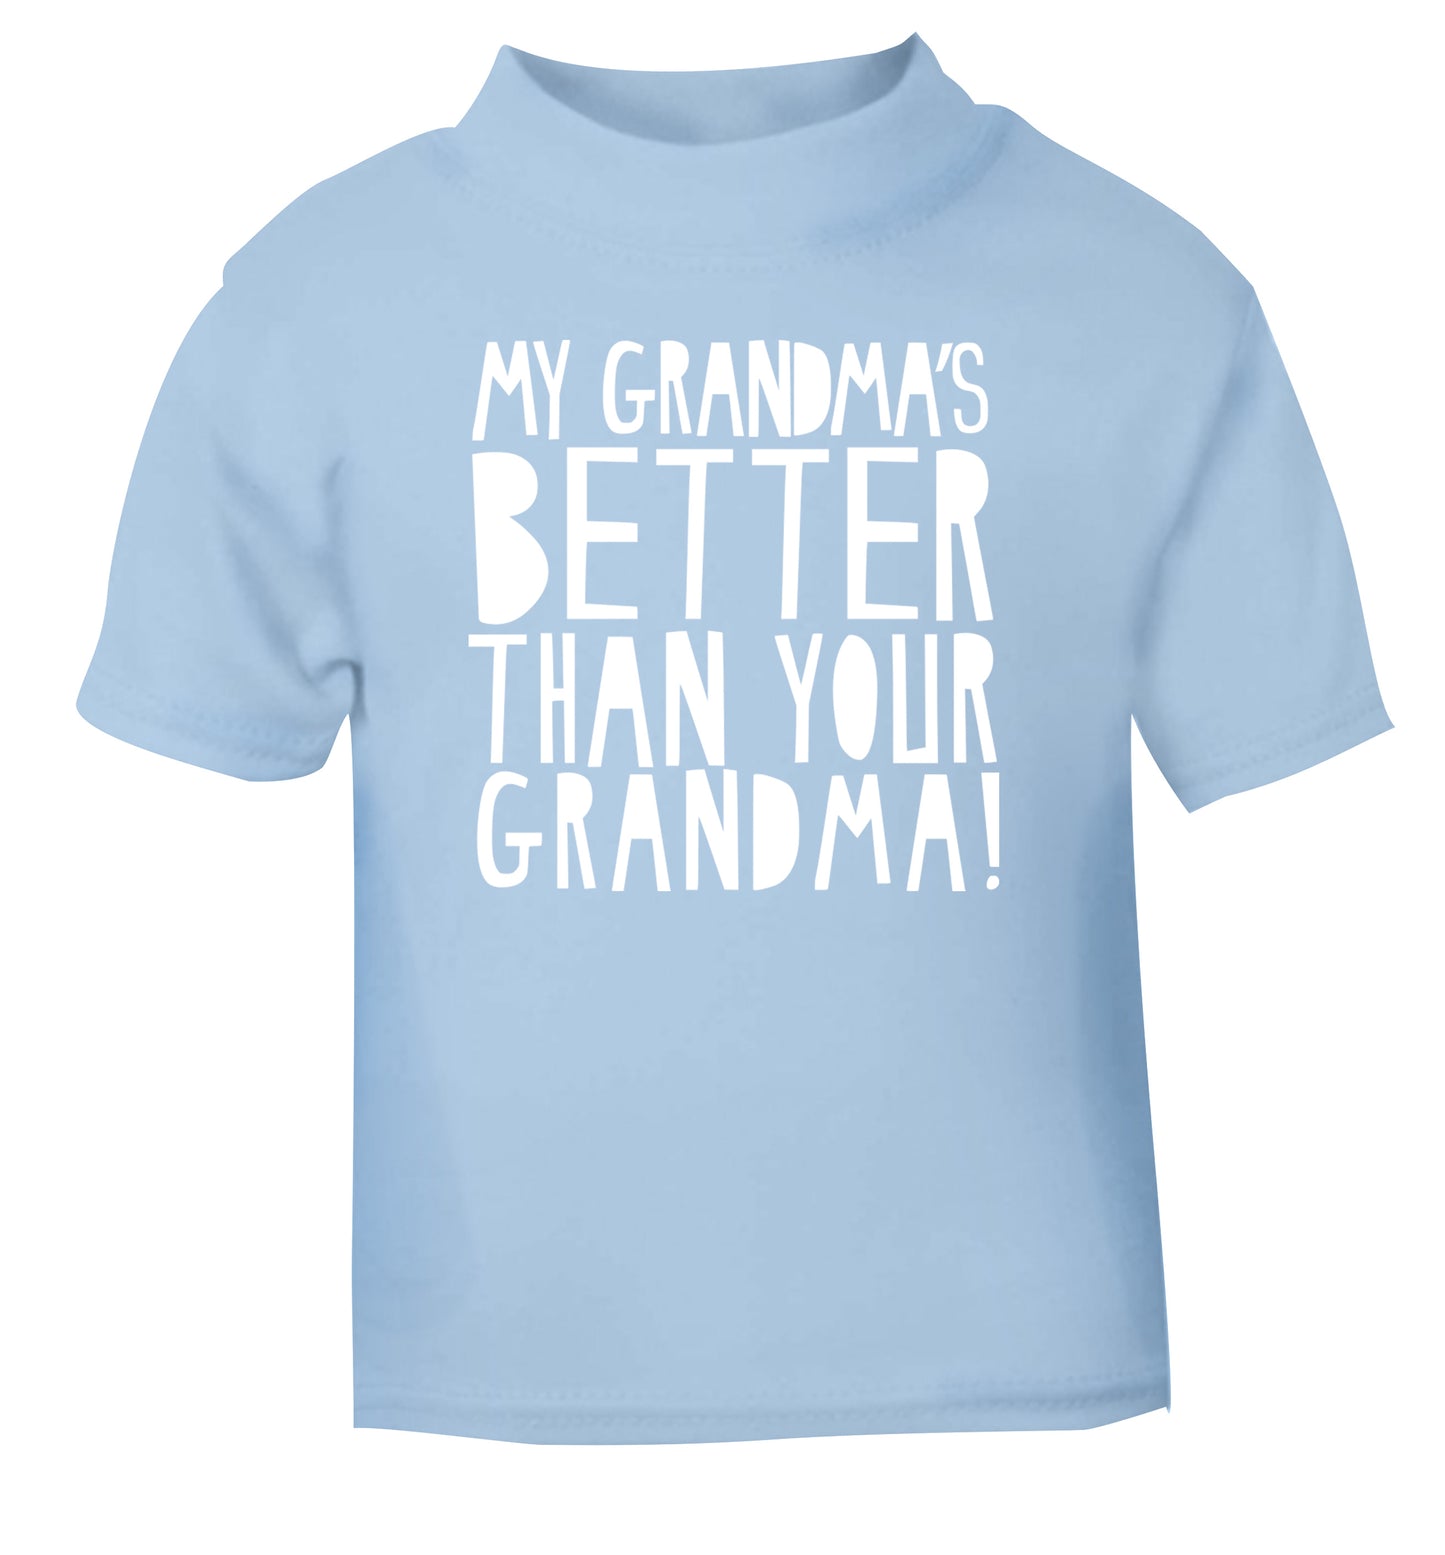 My grandma's better than your grandma light blue Baby Toddler Tshirt 2 Years